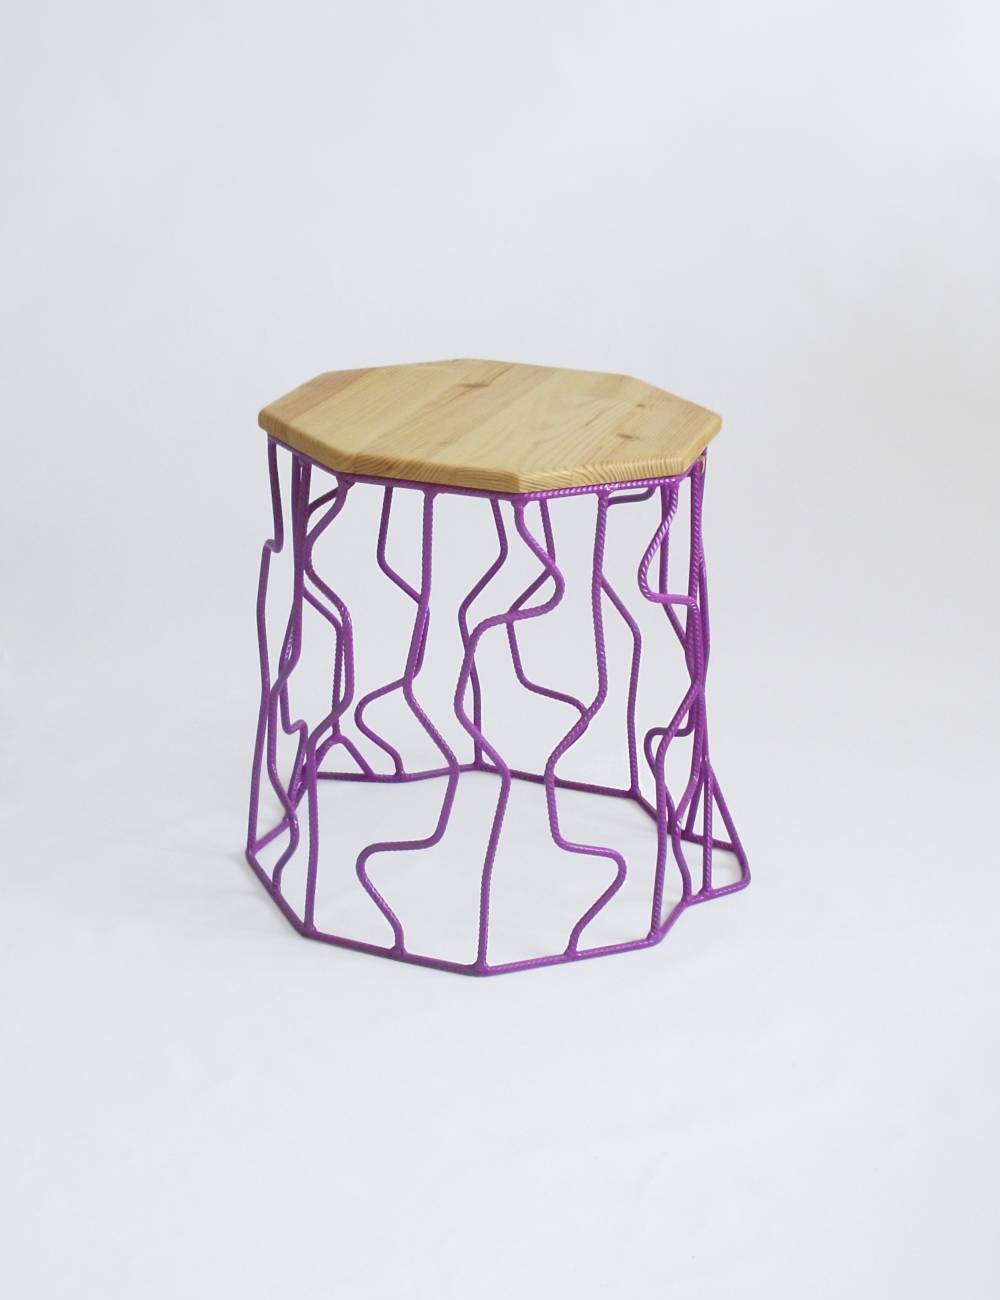 Wired stump stool